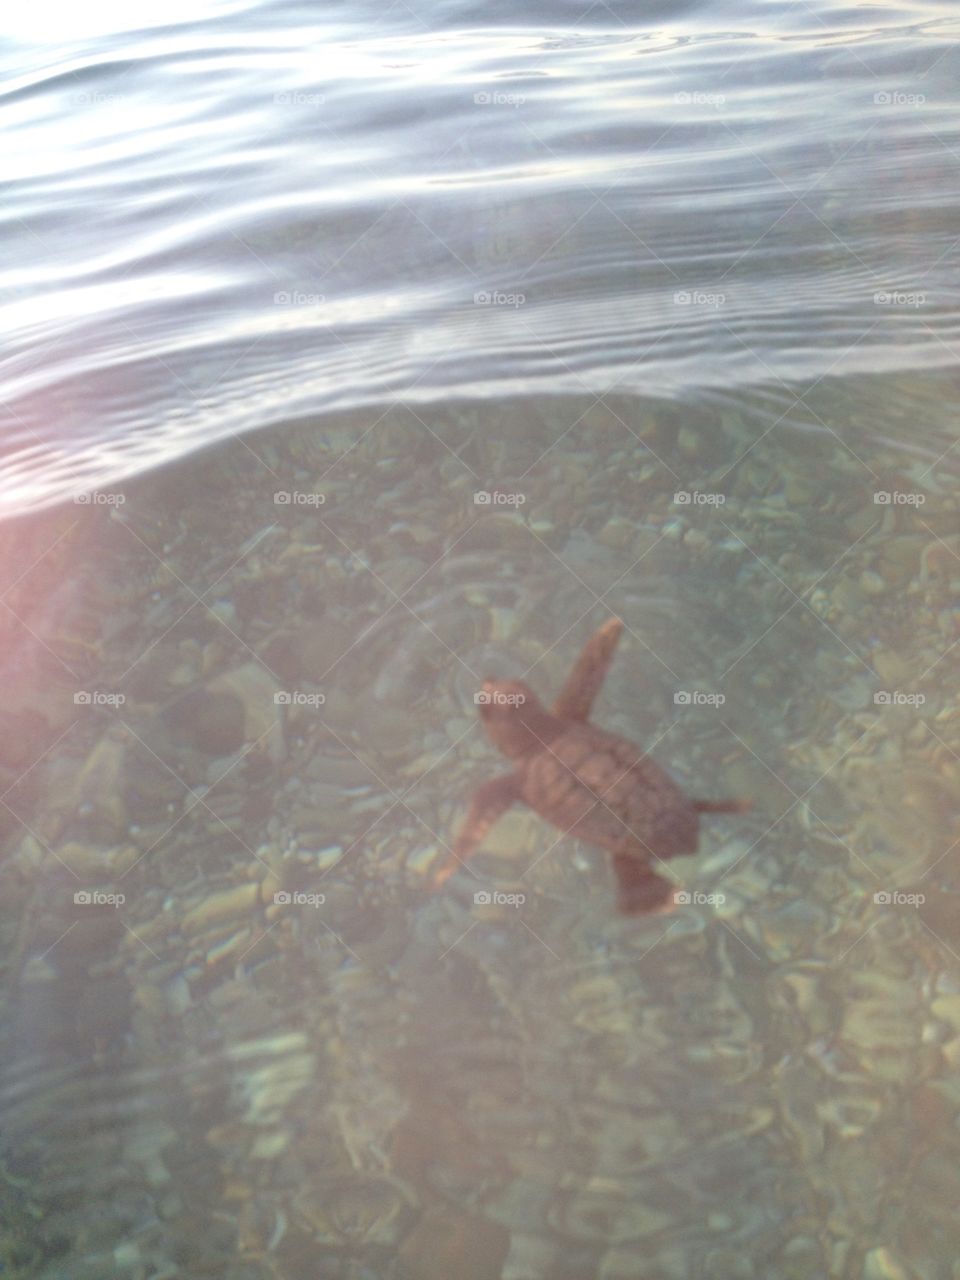 Baby turtle 